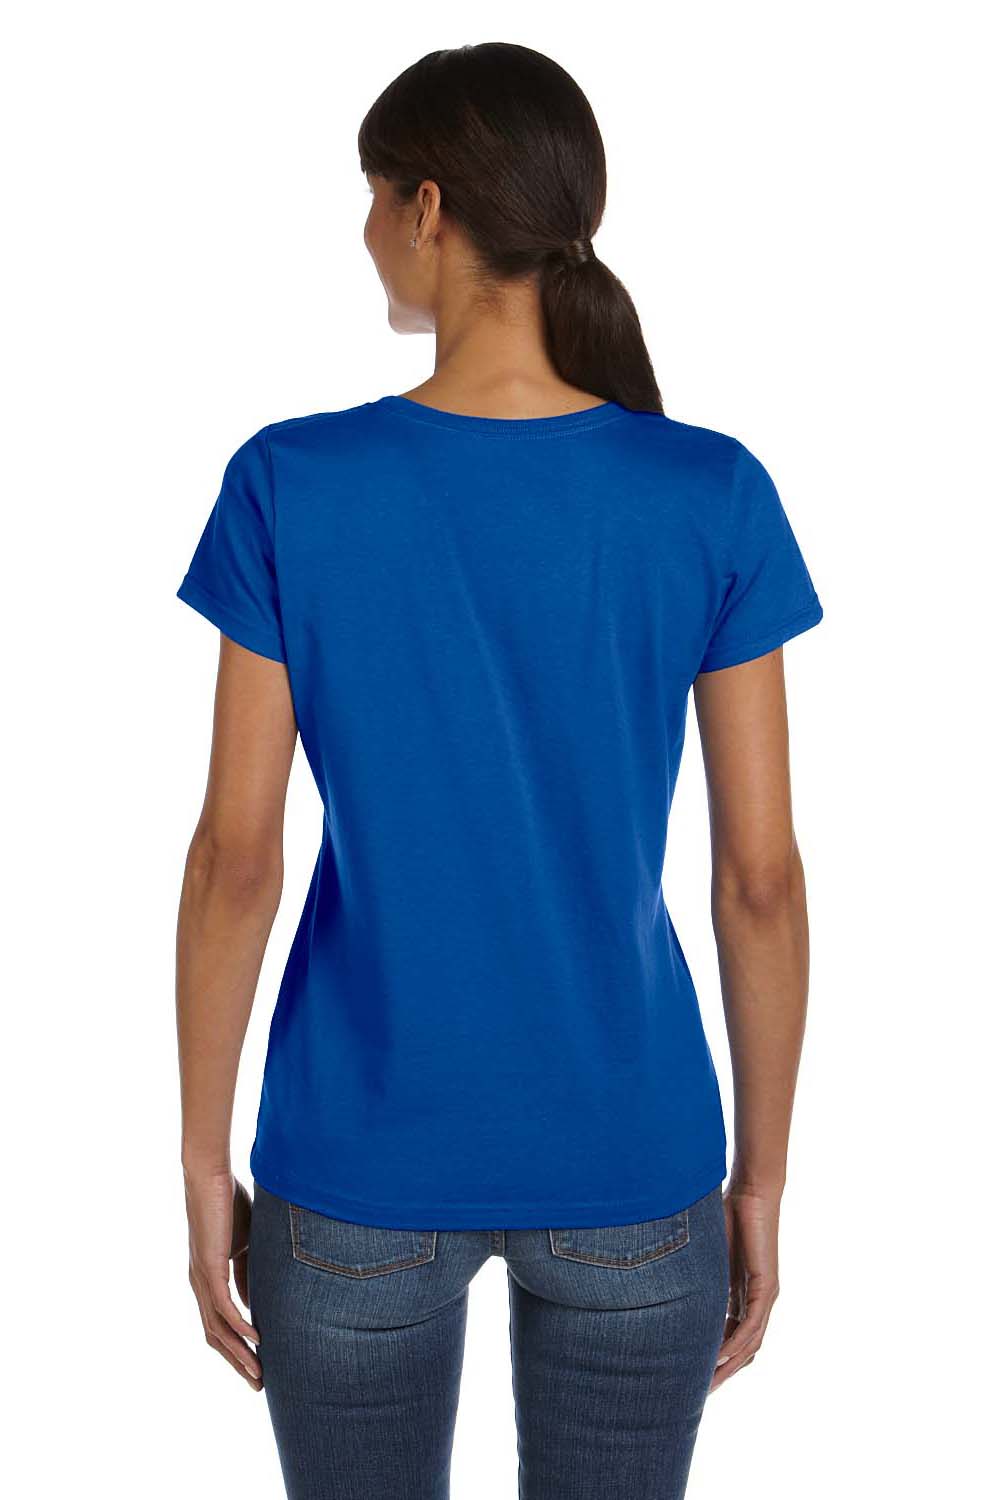 Fruit Of The Loom L3930R Womens HD Jersey Short Sleeve Crewneck T-Shirt Royal Blue Back